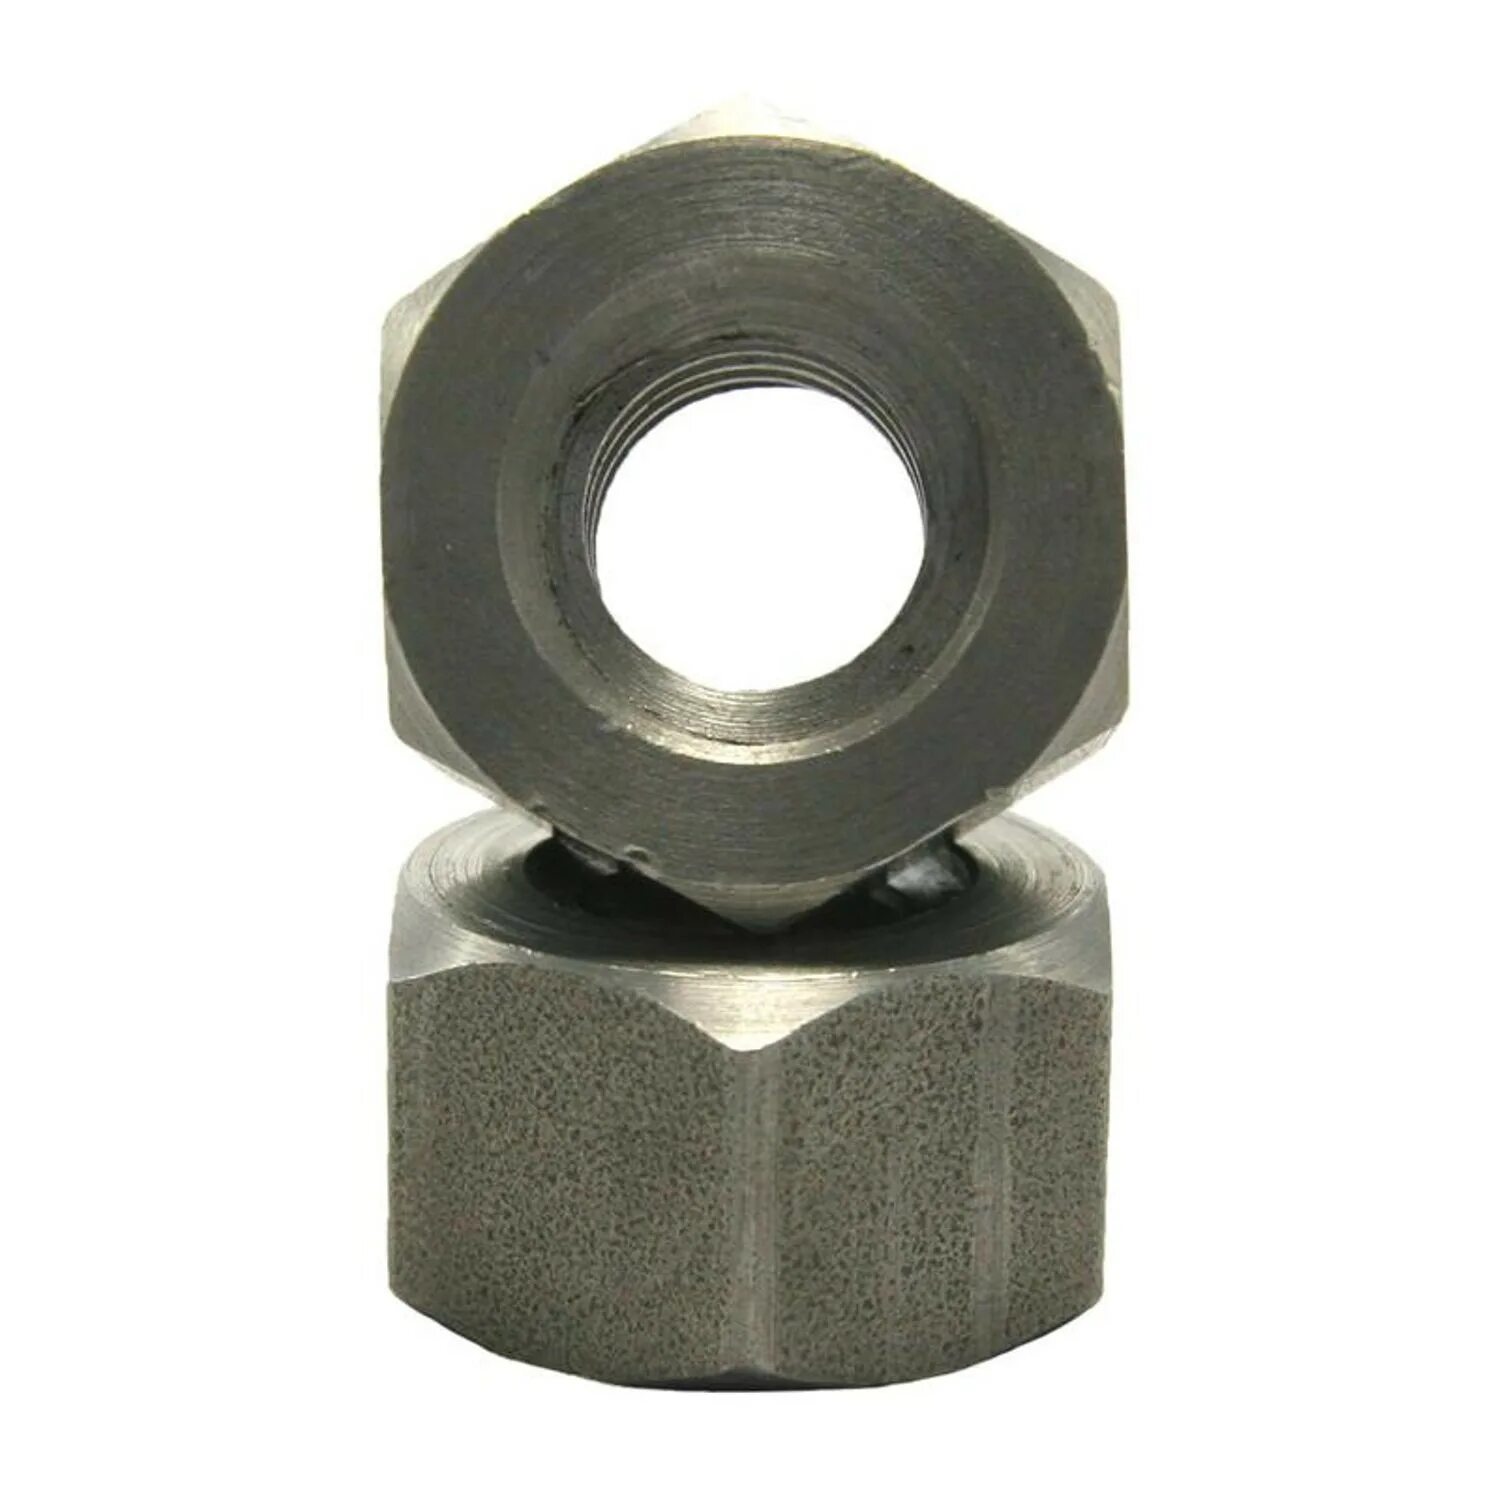 0 13 мм в м. Nut k-700 pts-9 for fastening the Wheel (l-22mm)м20*1,5. 3сл гайка 15 d=90 mm сталь / nut 3сл 15 d=90 mm. Acme nut. Acme hex Core model 2000.